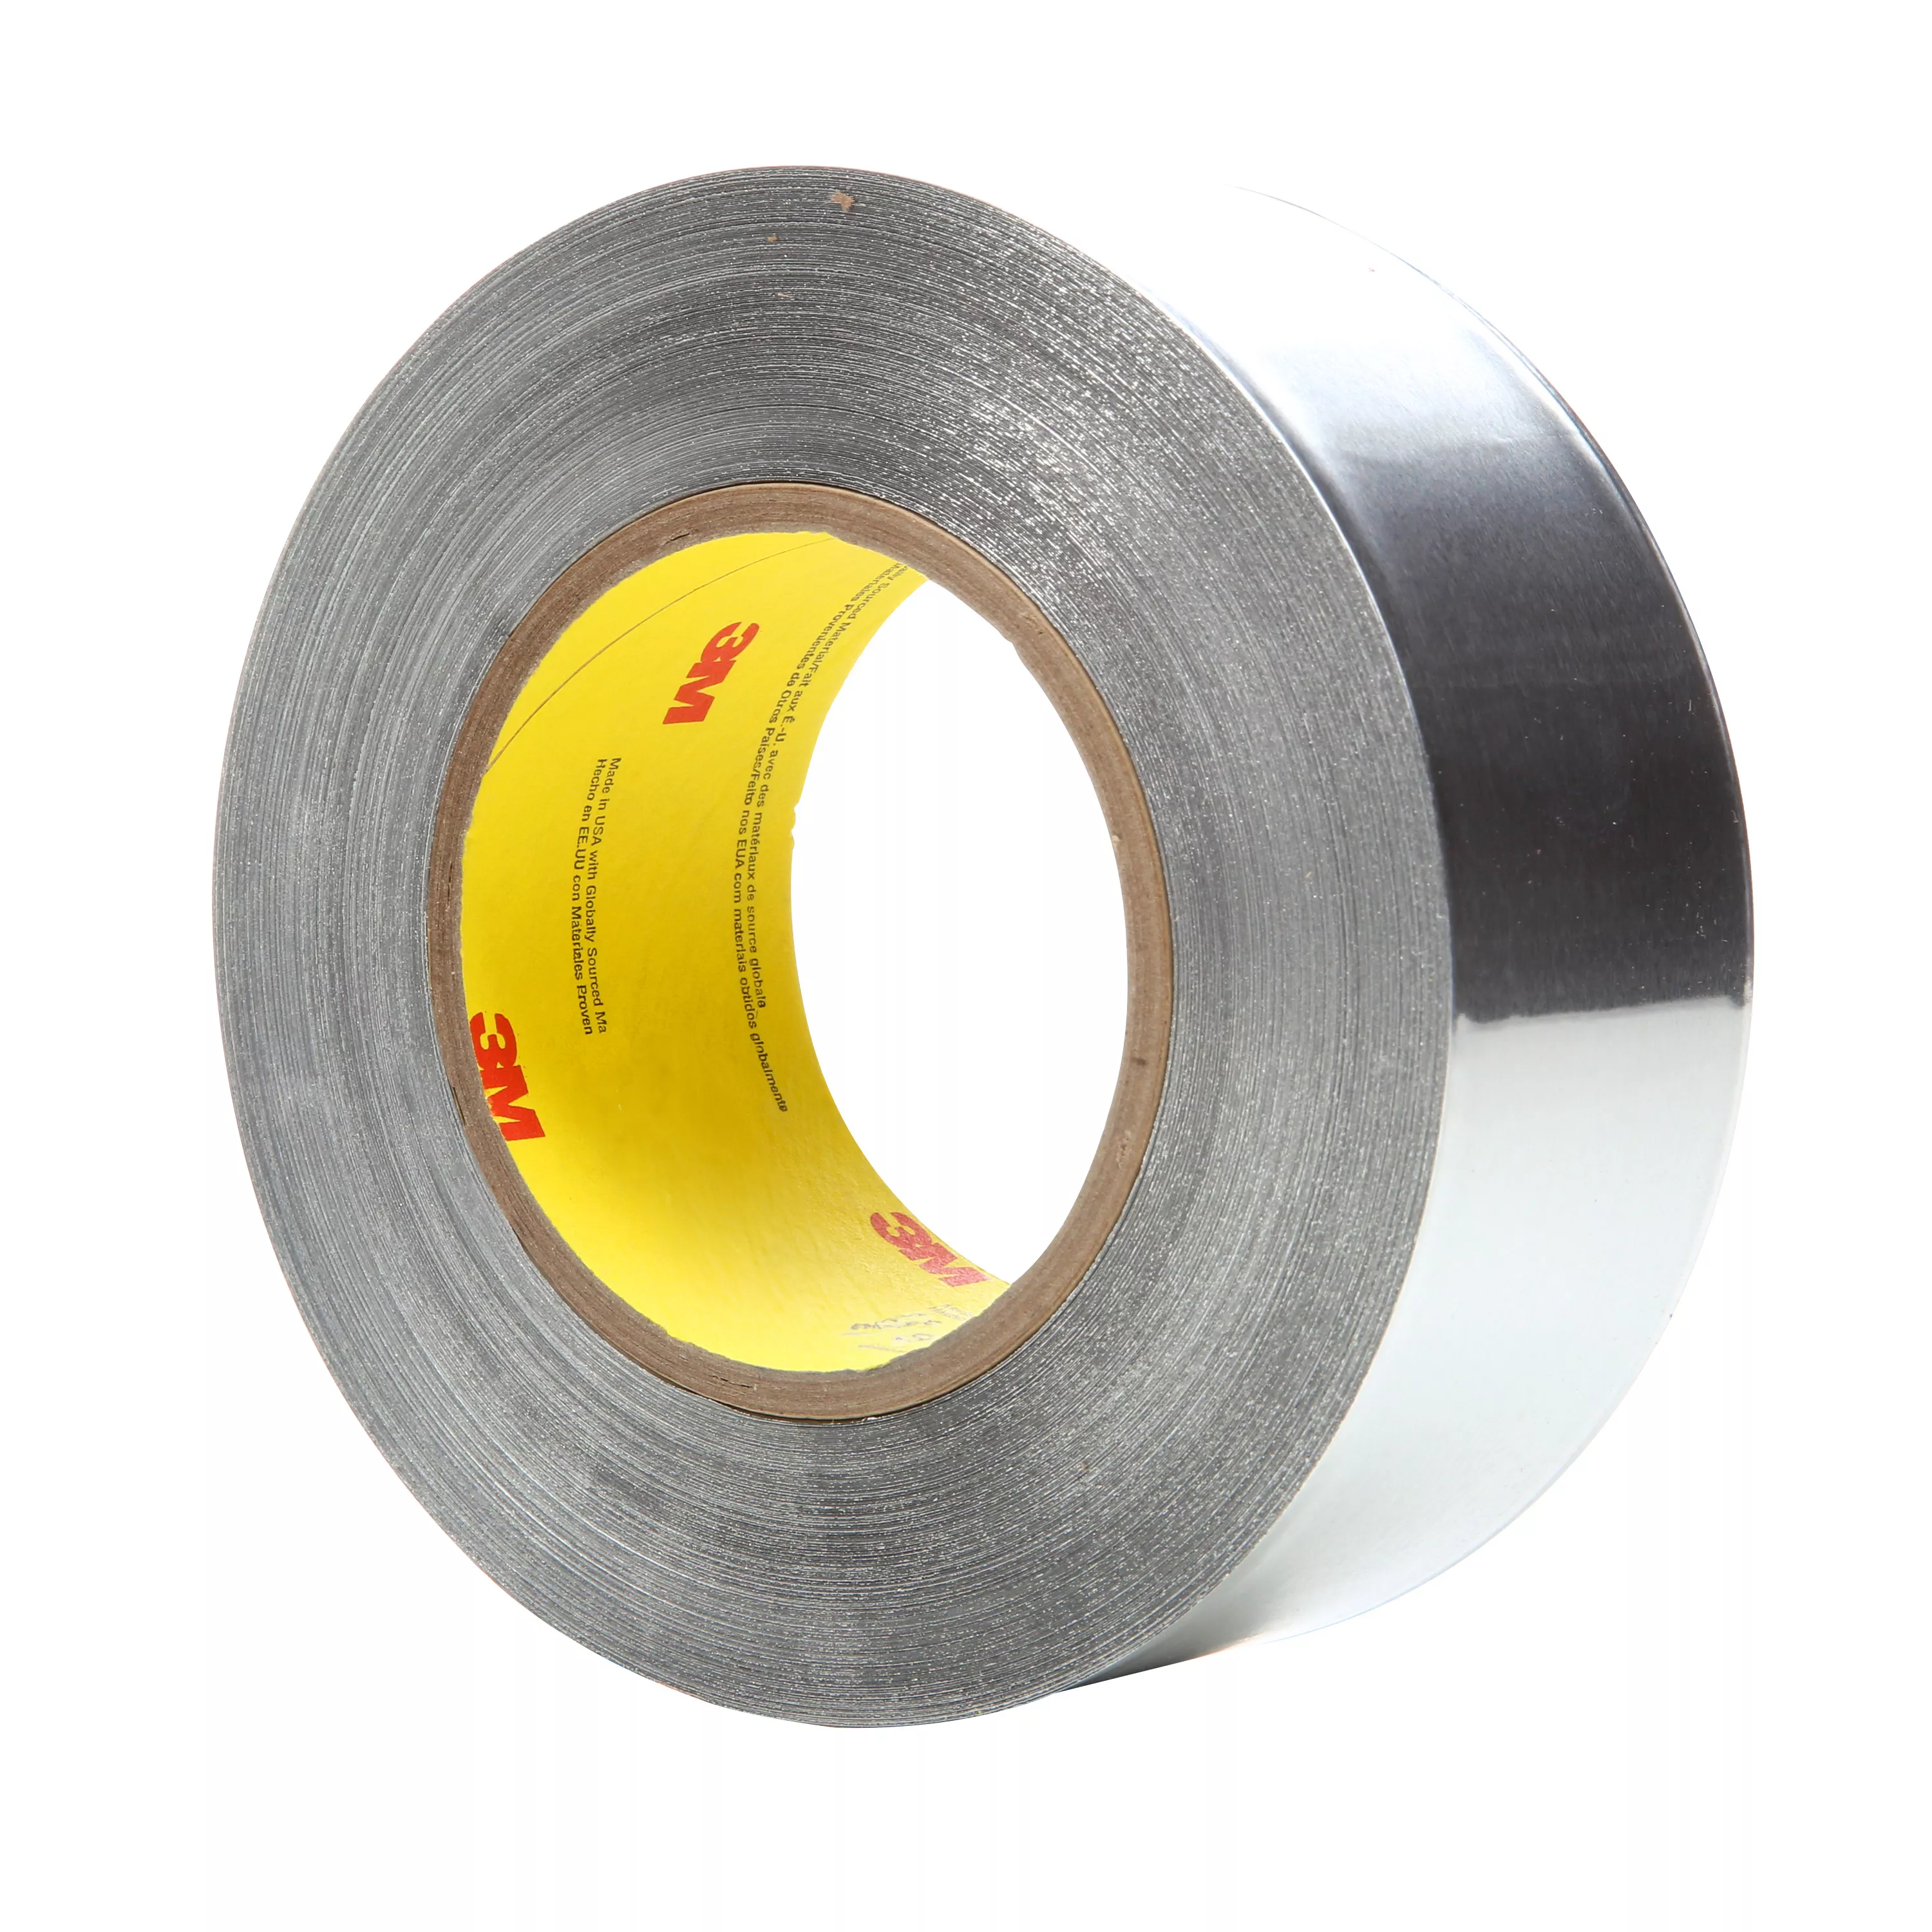 Product Number 438 | 3M™ Heavy Duty Aluminum Foil Tape 438